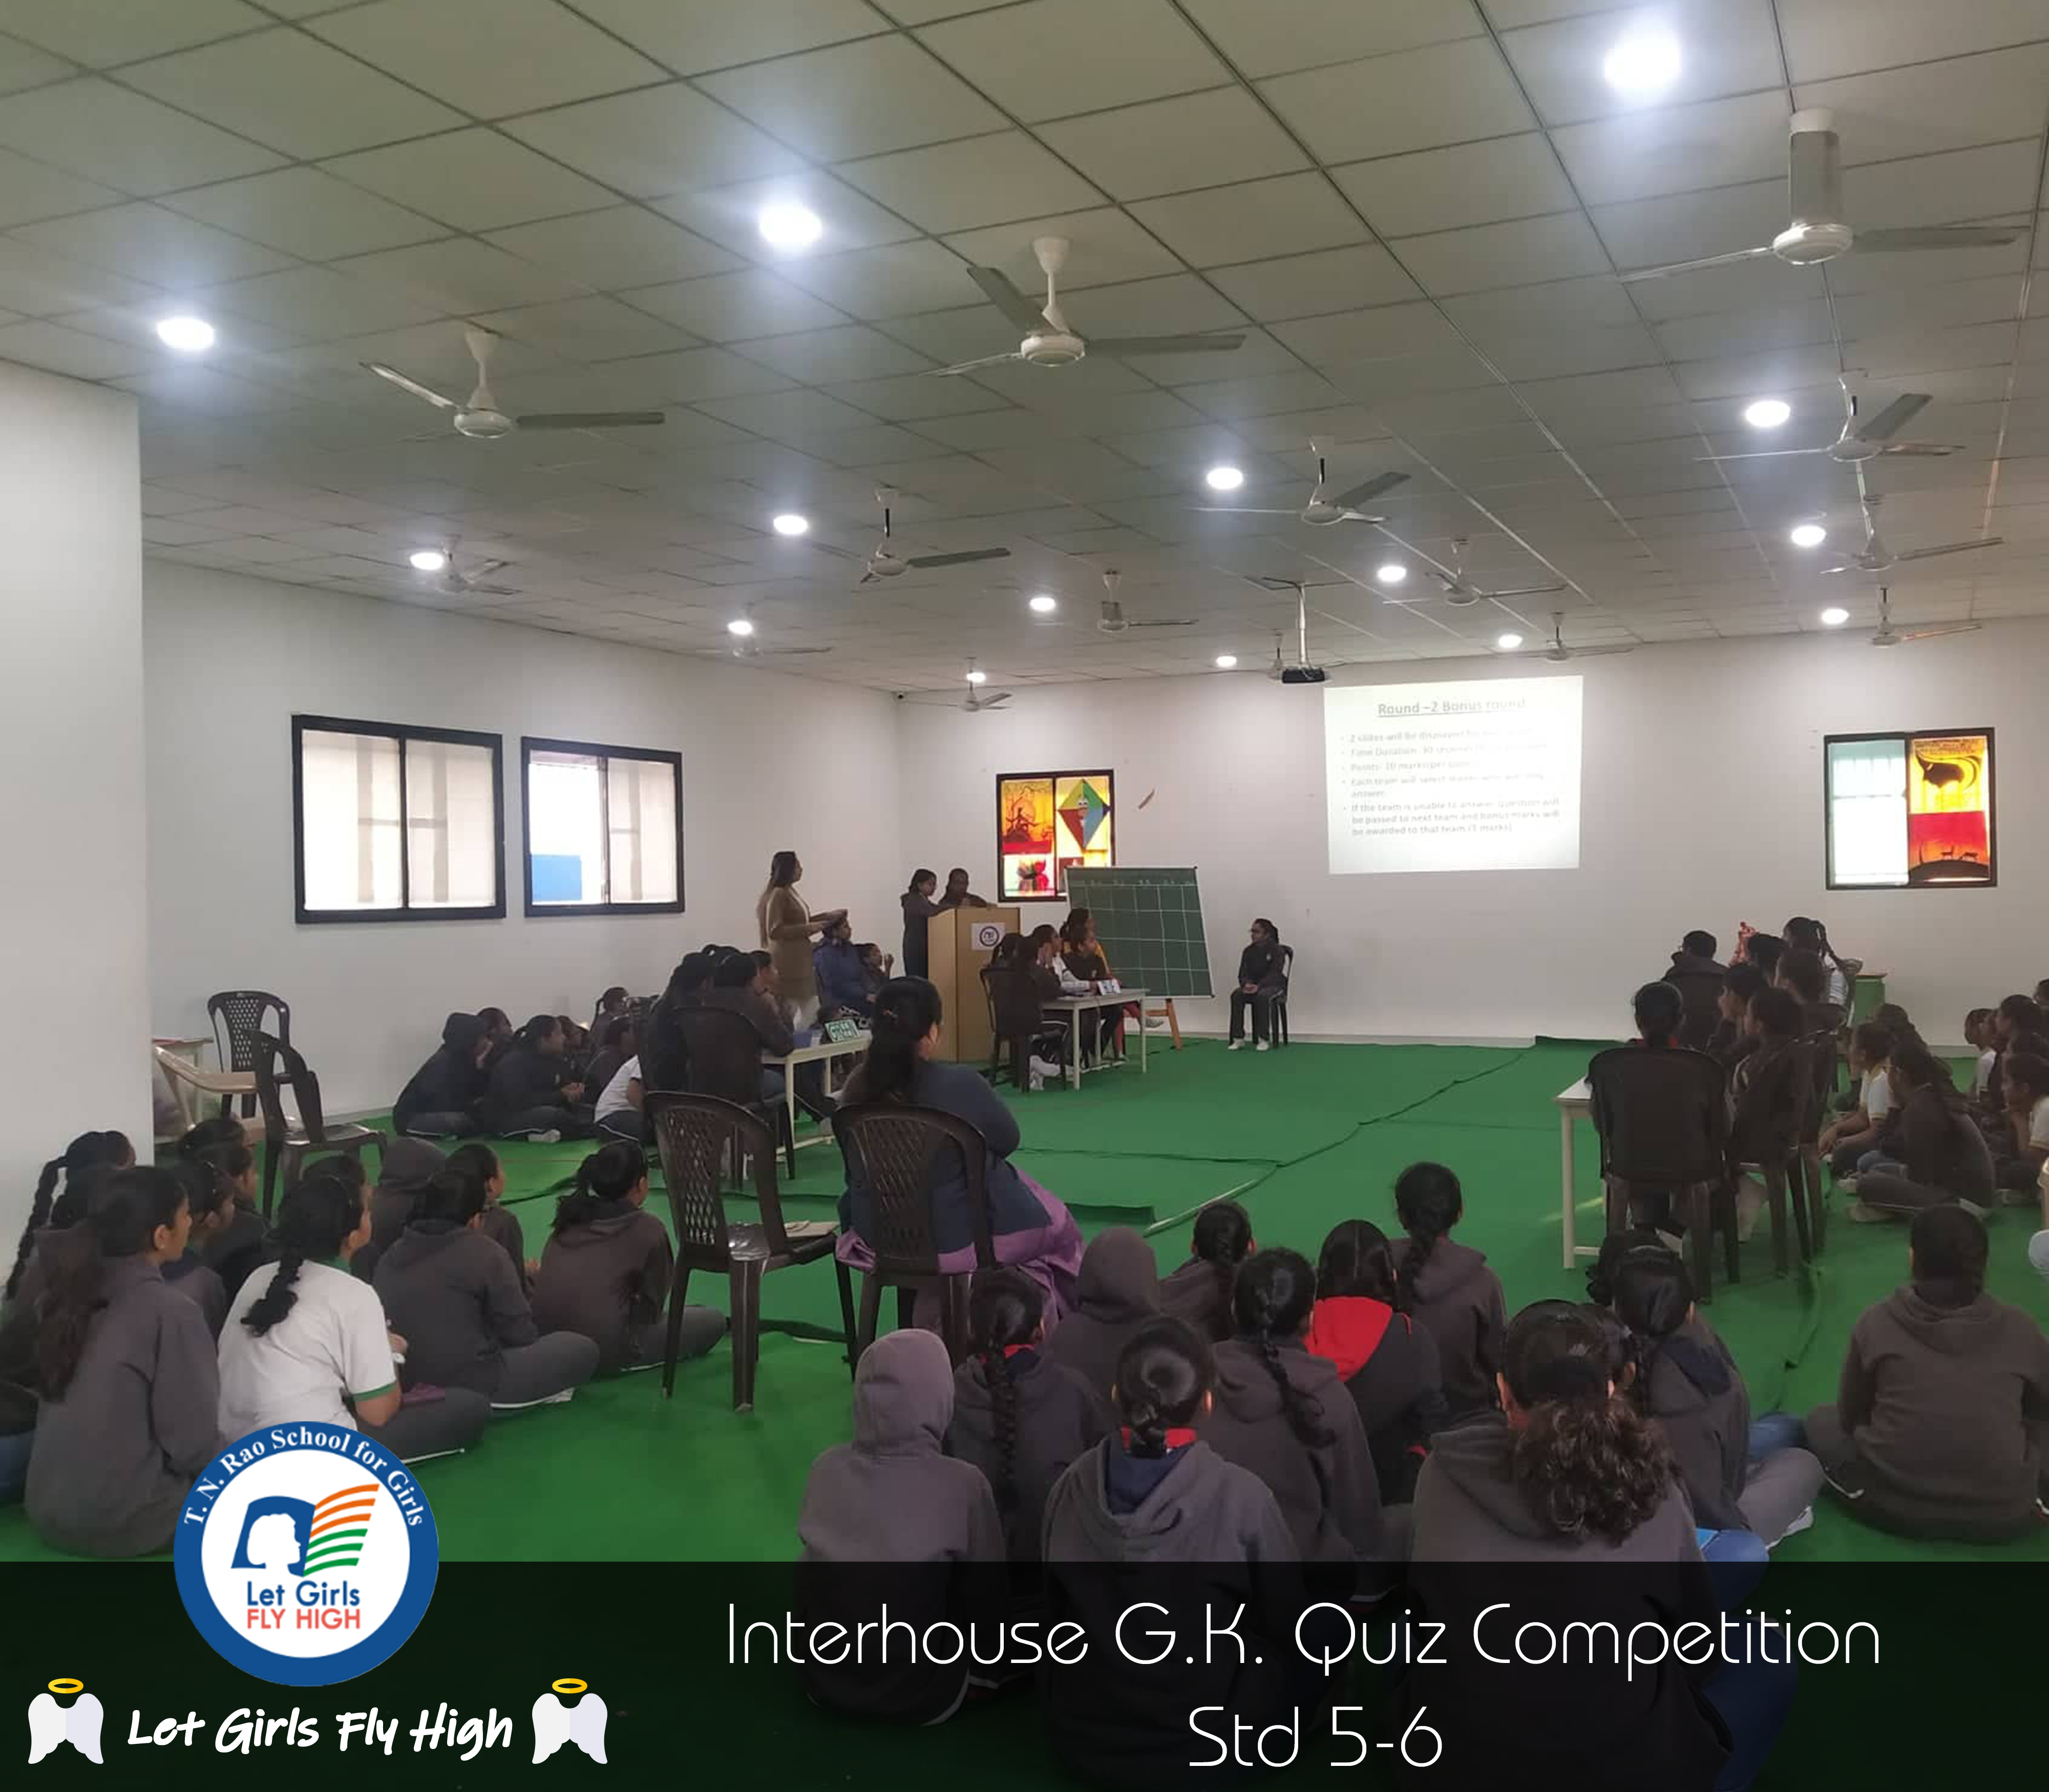 Interhouse G.K. Quiz Competition